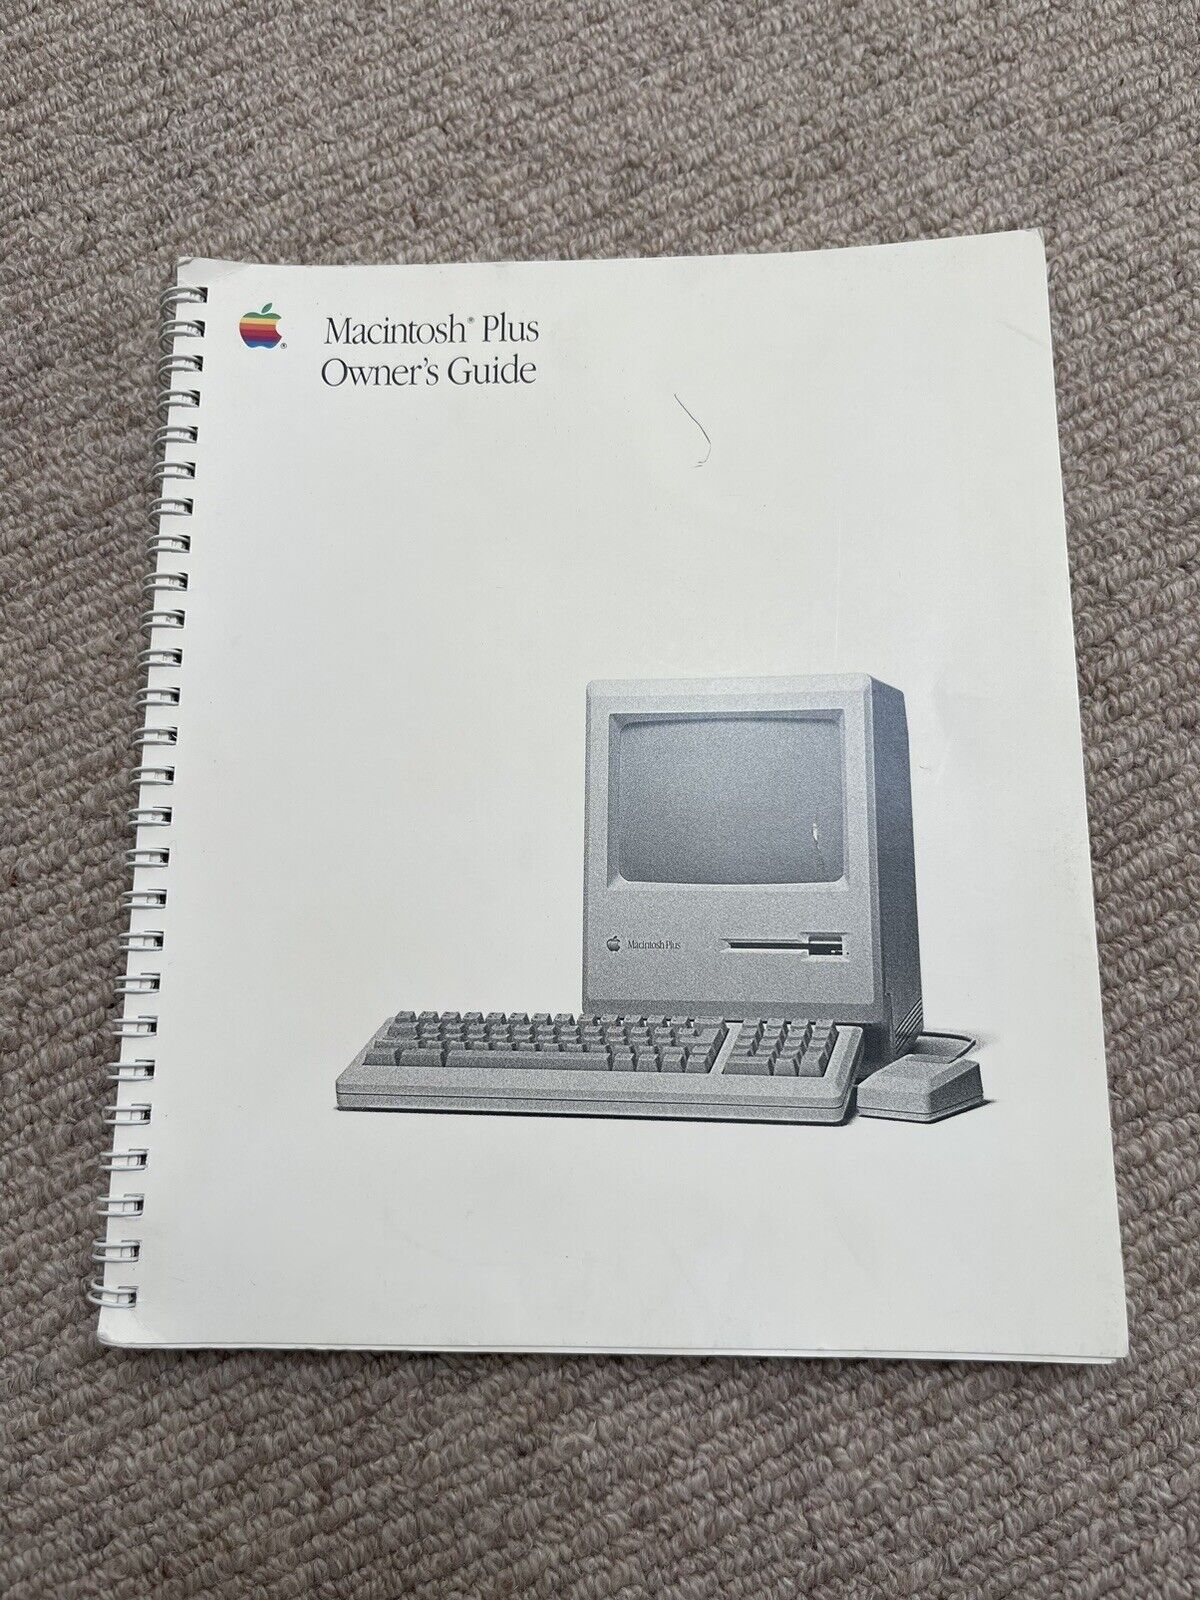 Apple Macintosh Plus Owner’s Guide VTG 1988 Manual